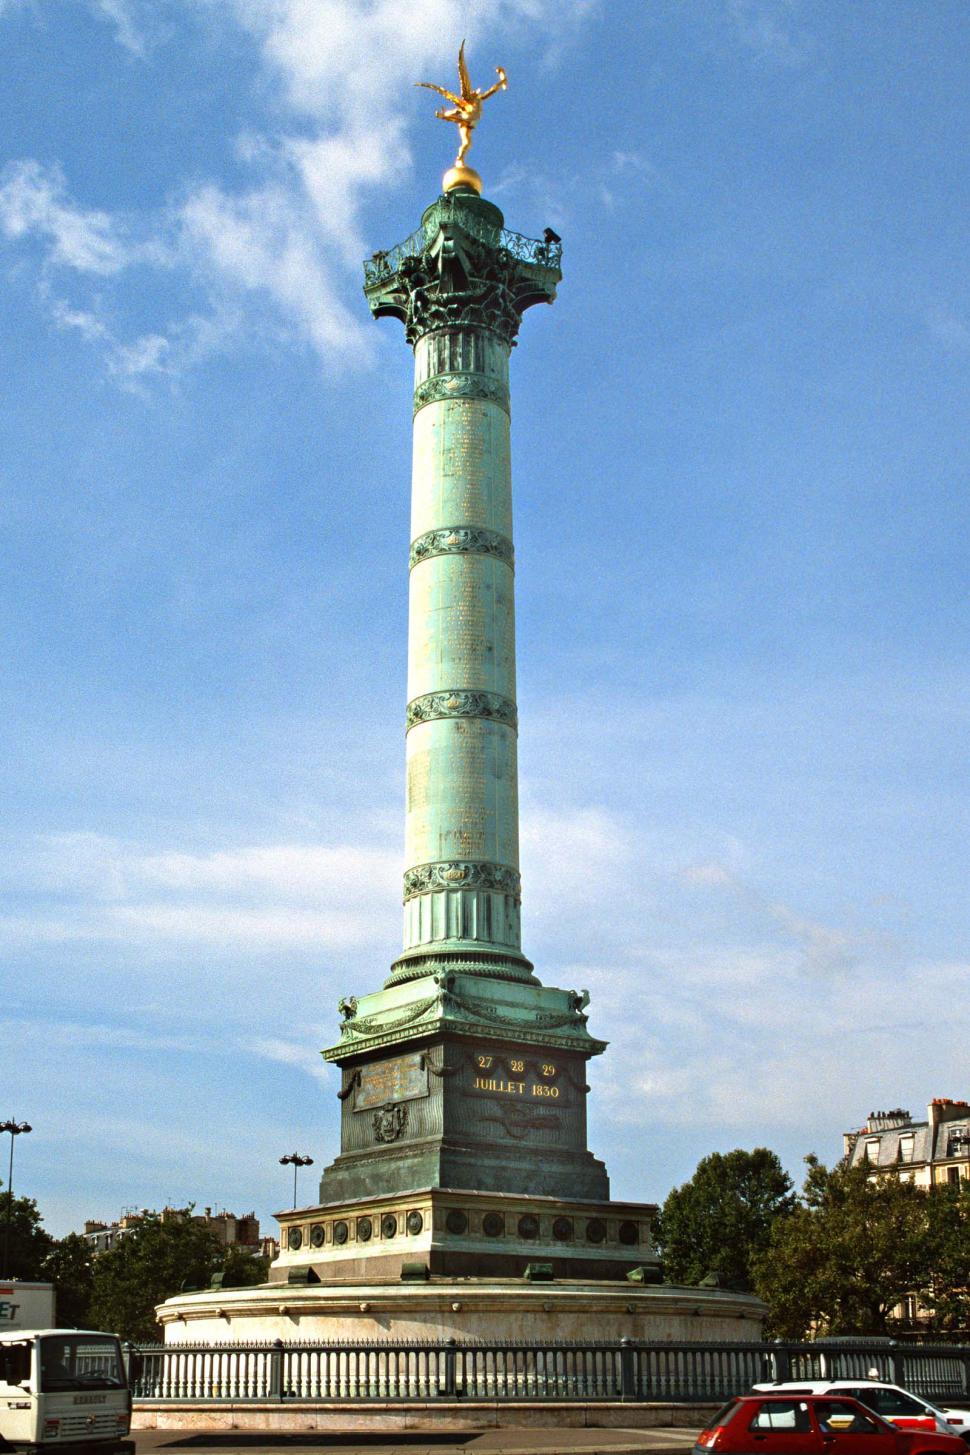 Free Image of france obelisk monument statue sculpture landmark french europe european paris bastille july column place de la Bastille 